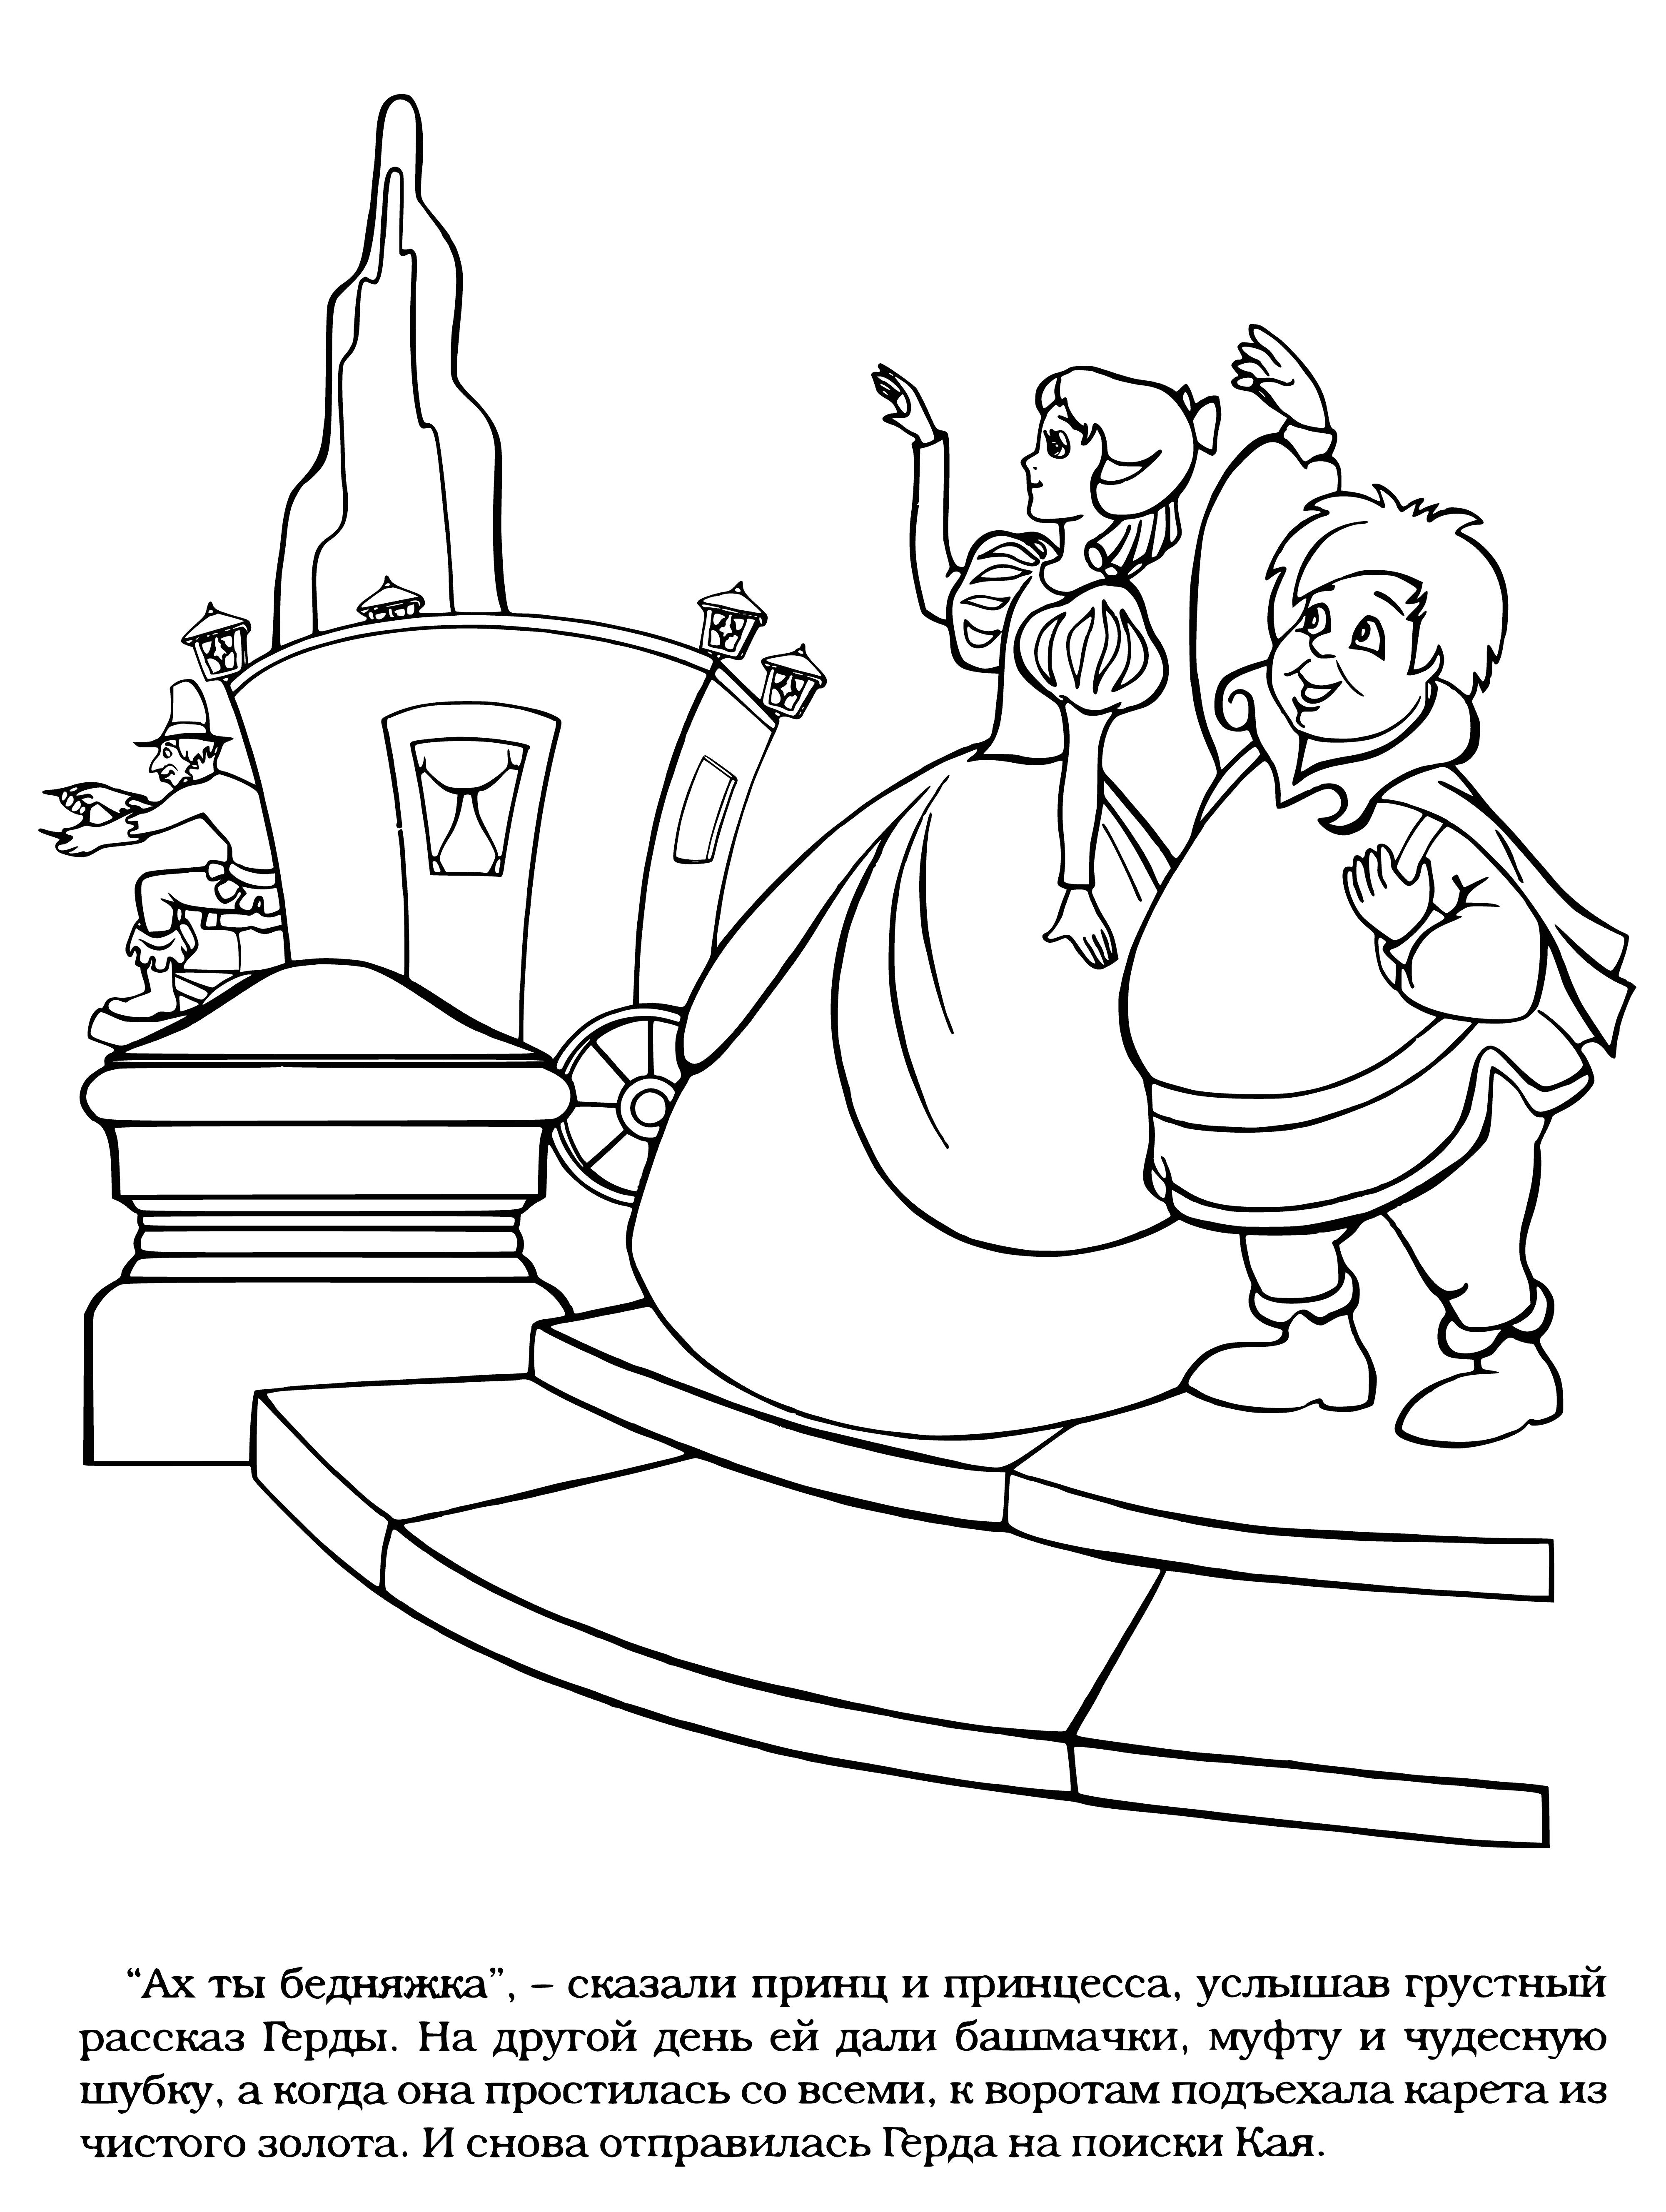 Prince and Princess coloring page